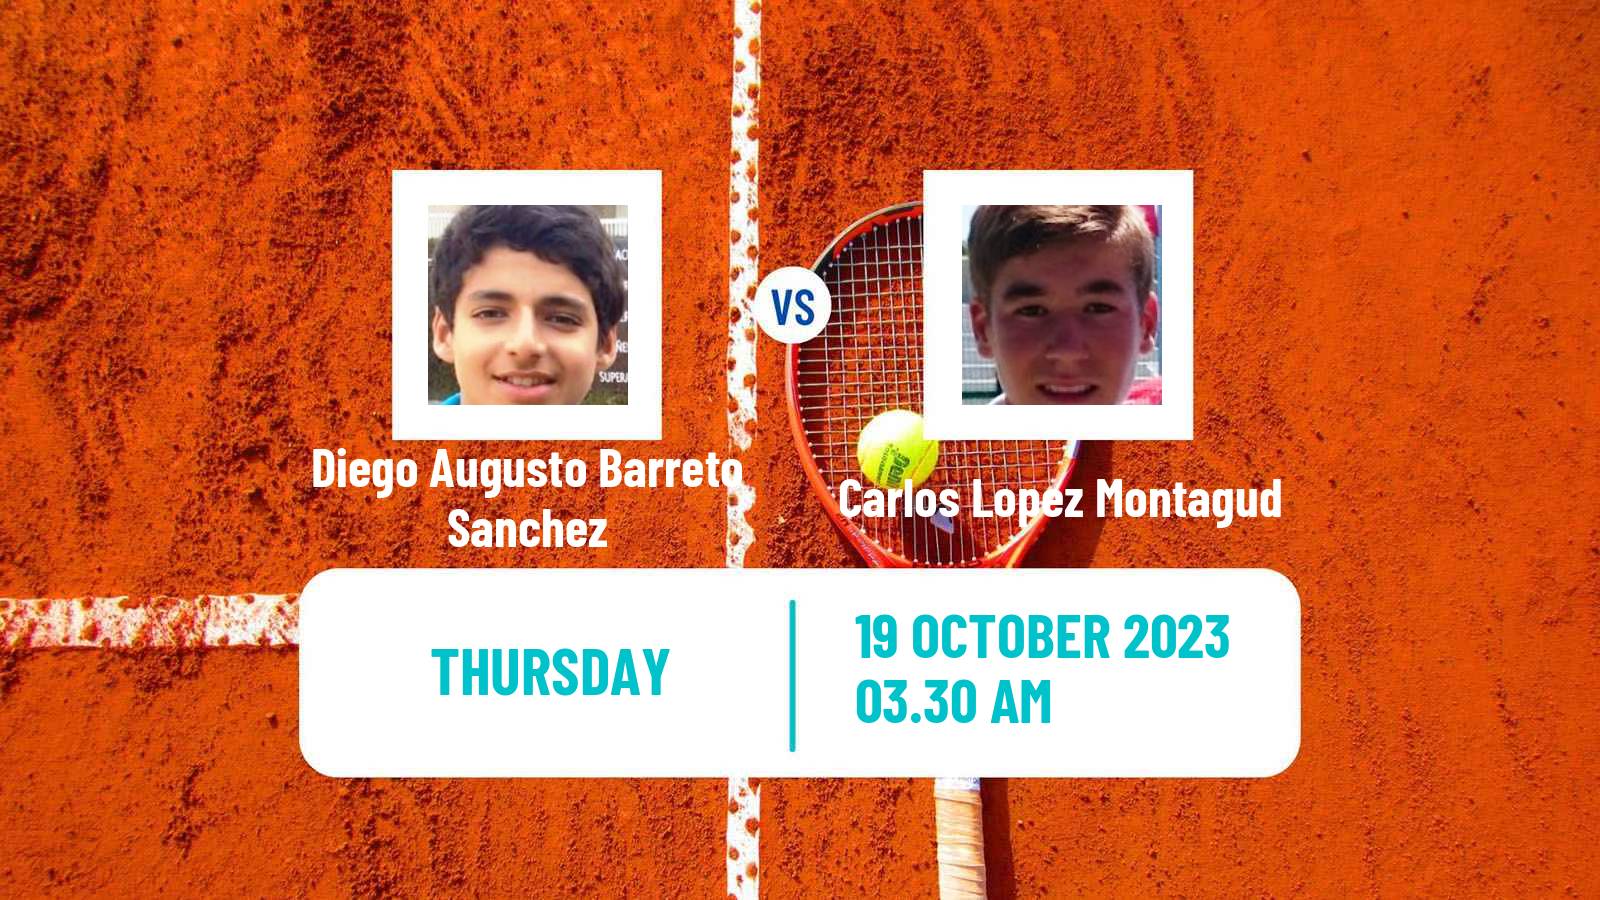 Tennis ITF M15 Castellon Men Diego Augusto Barreto Sanchez - Carlos Lopez Montagud